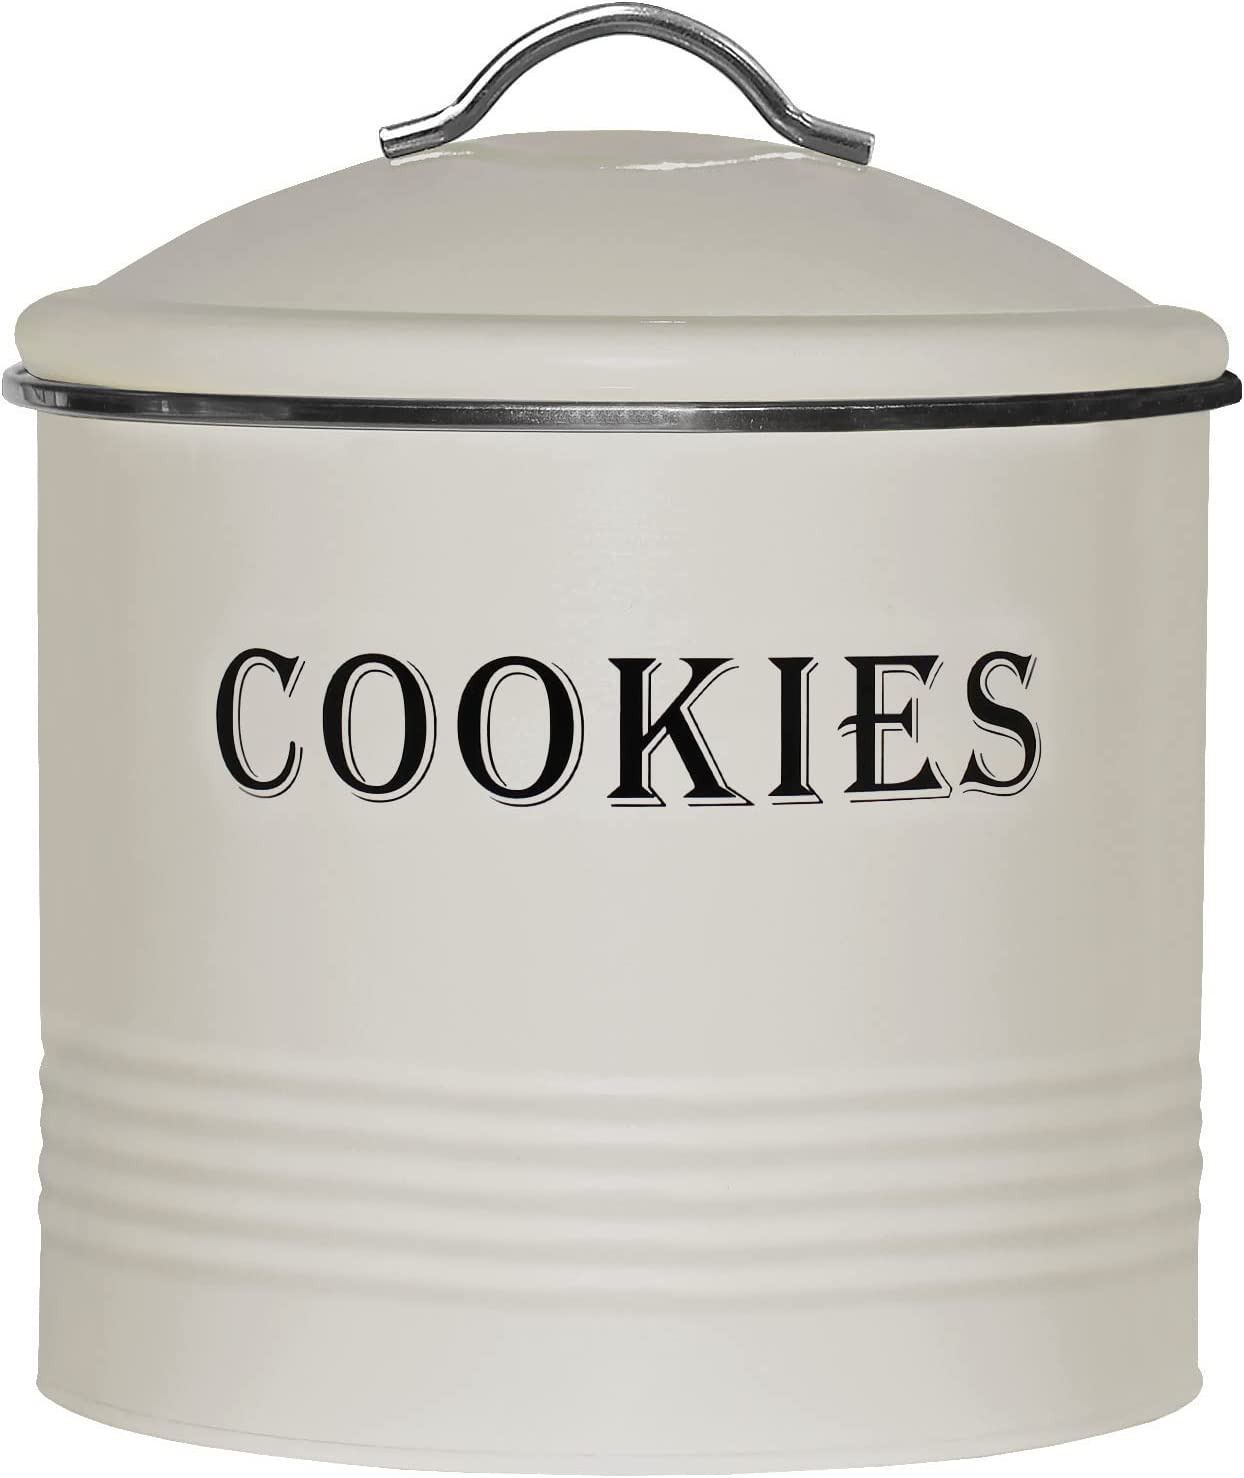 Blue Donuts Vintage Cookie Jar - Cookie Jars for Kitchen Counter, Airtight Jar